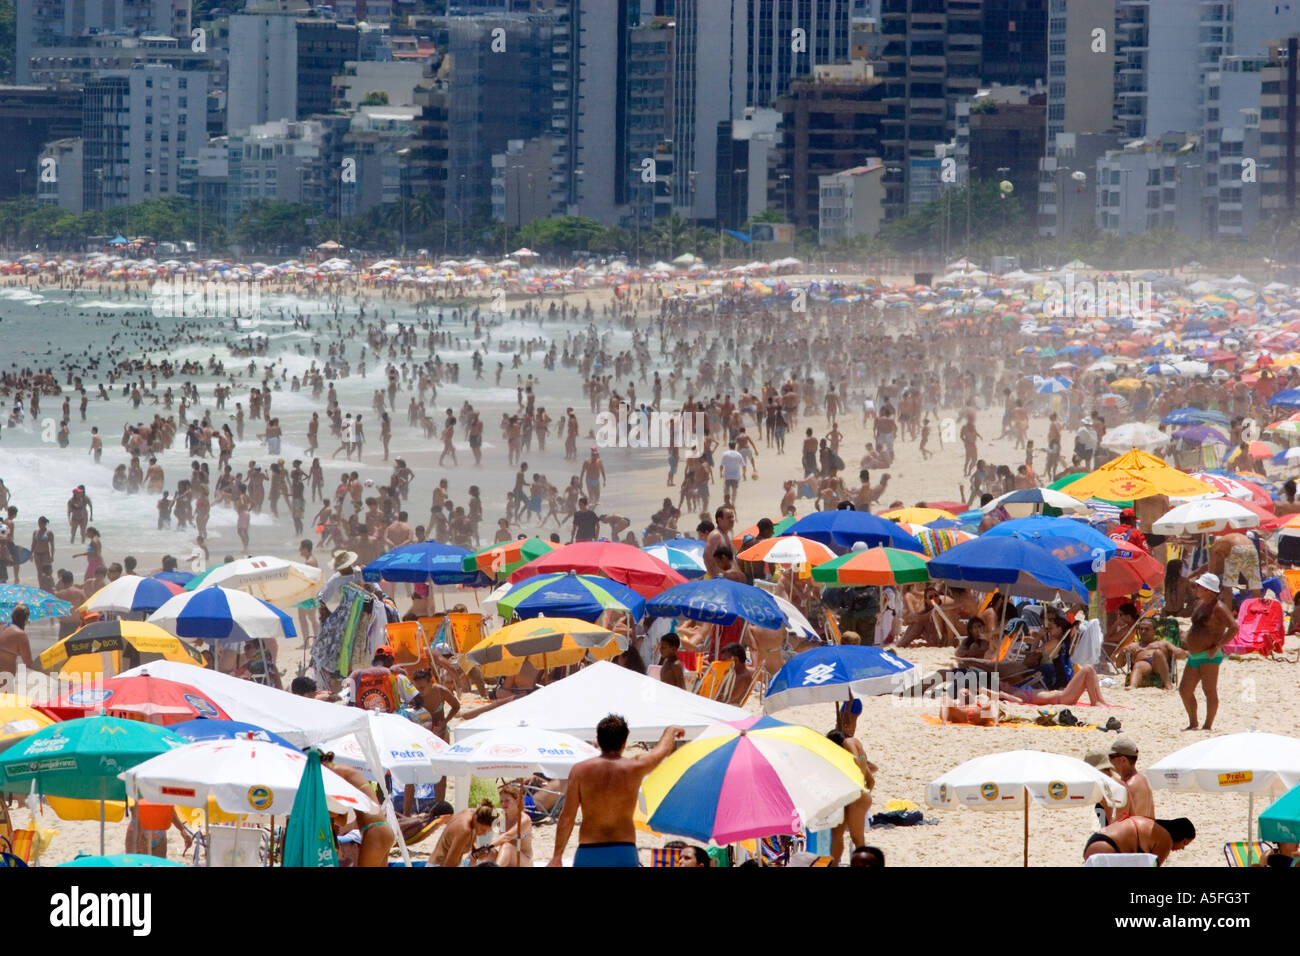 Crowed beach scene at the Ipanema Beach in Rio de Janeiro Brazil Stock Photo